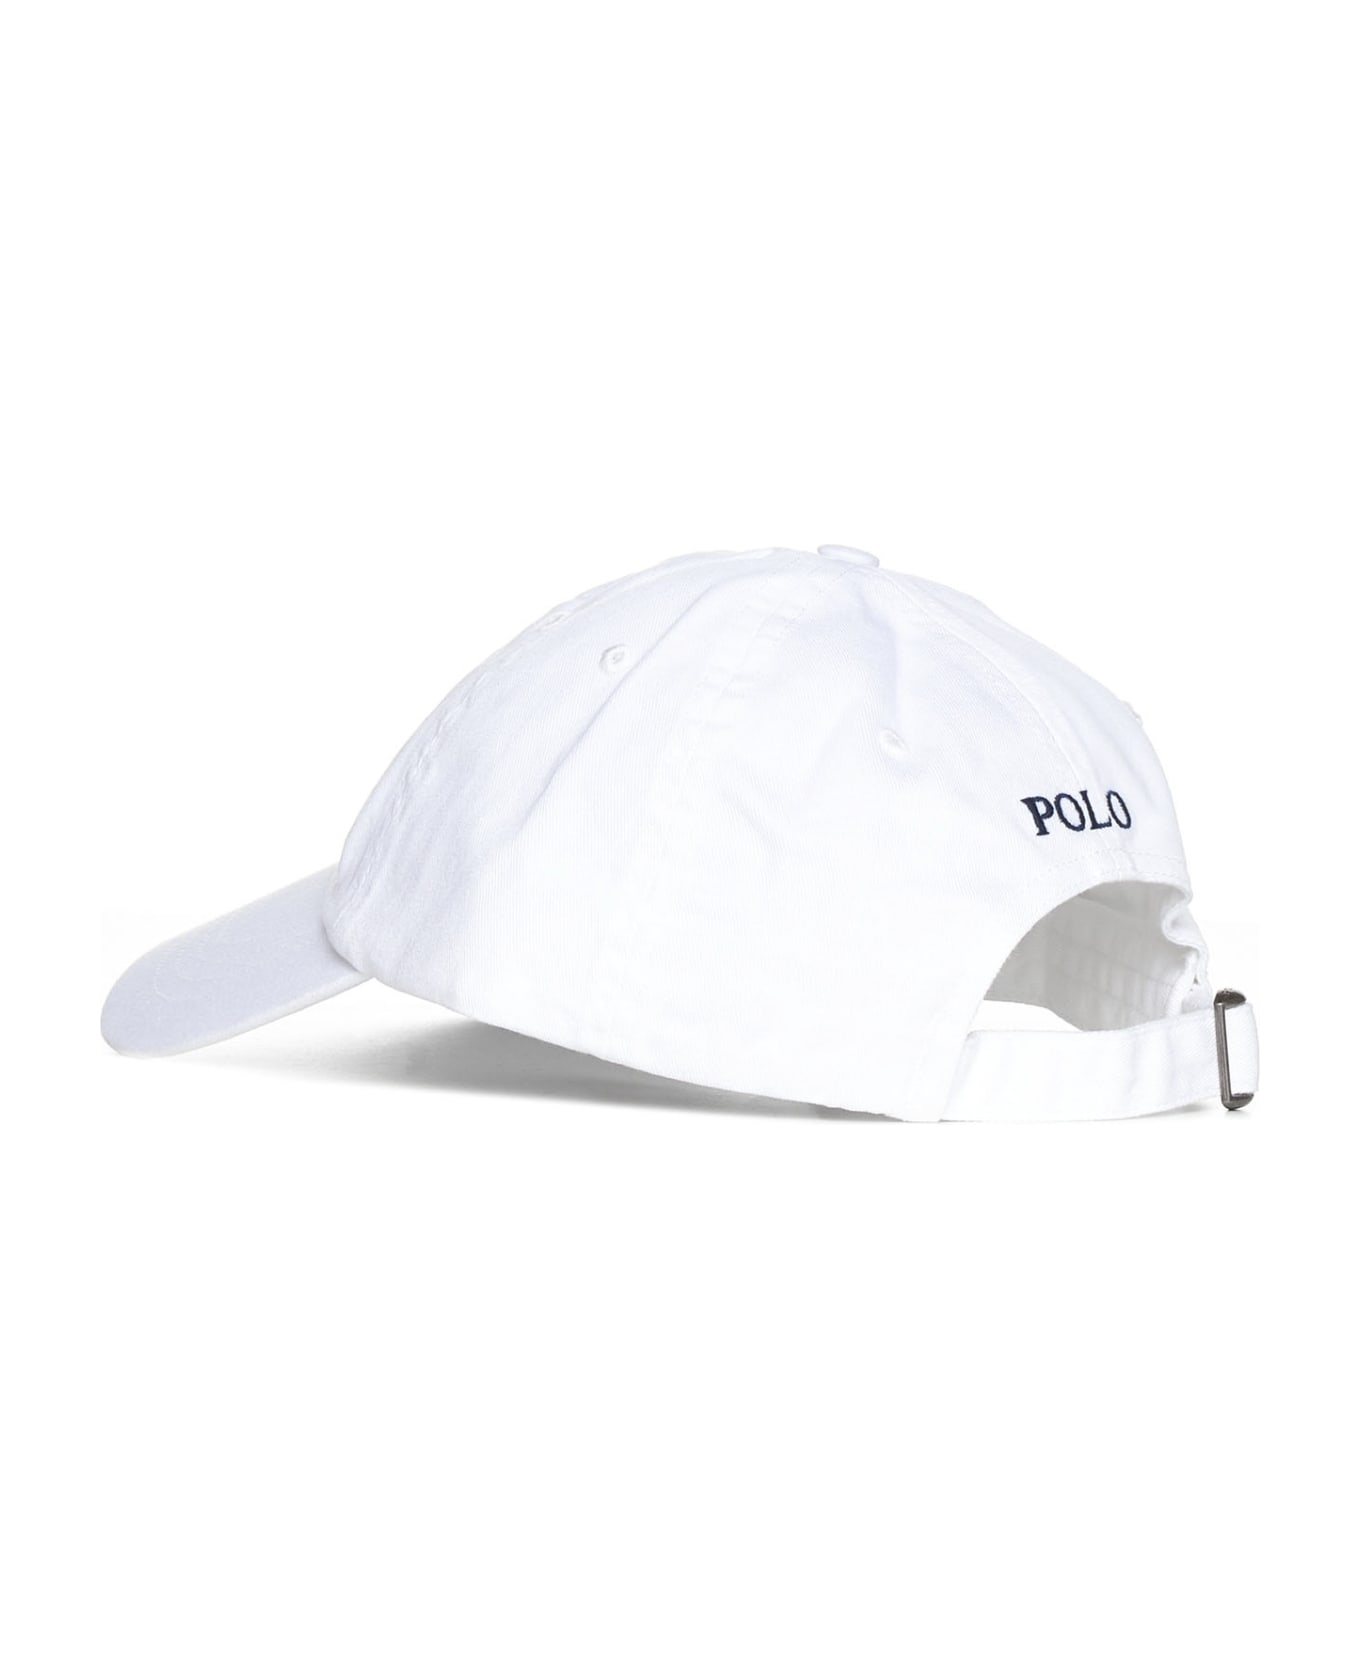 Polo Ralph Lauren Hat - White newport navy